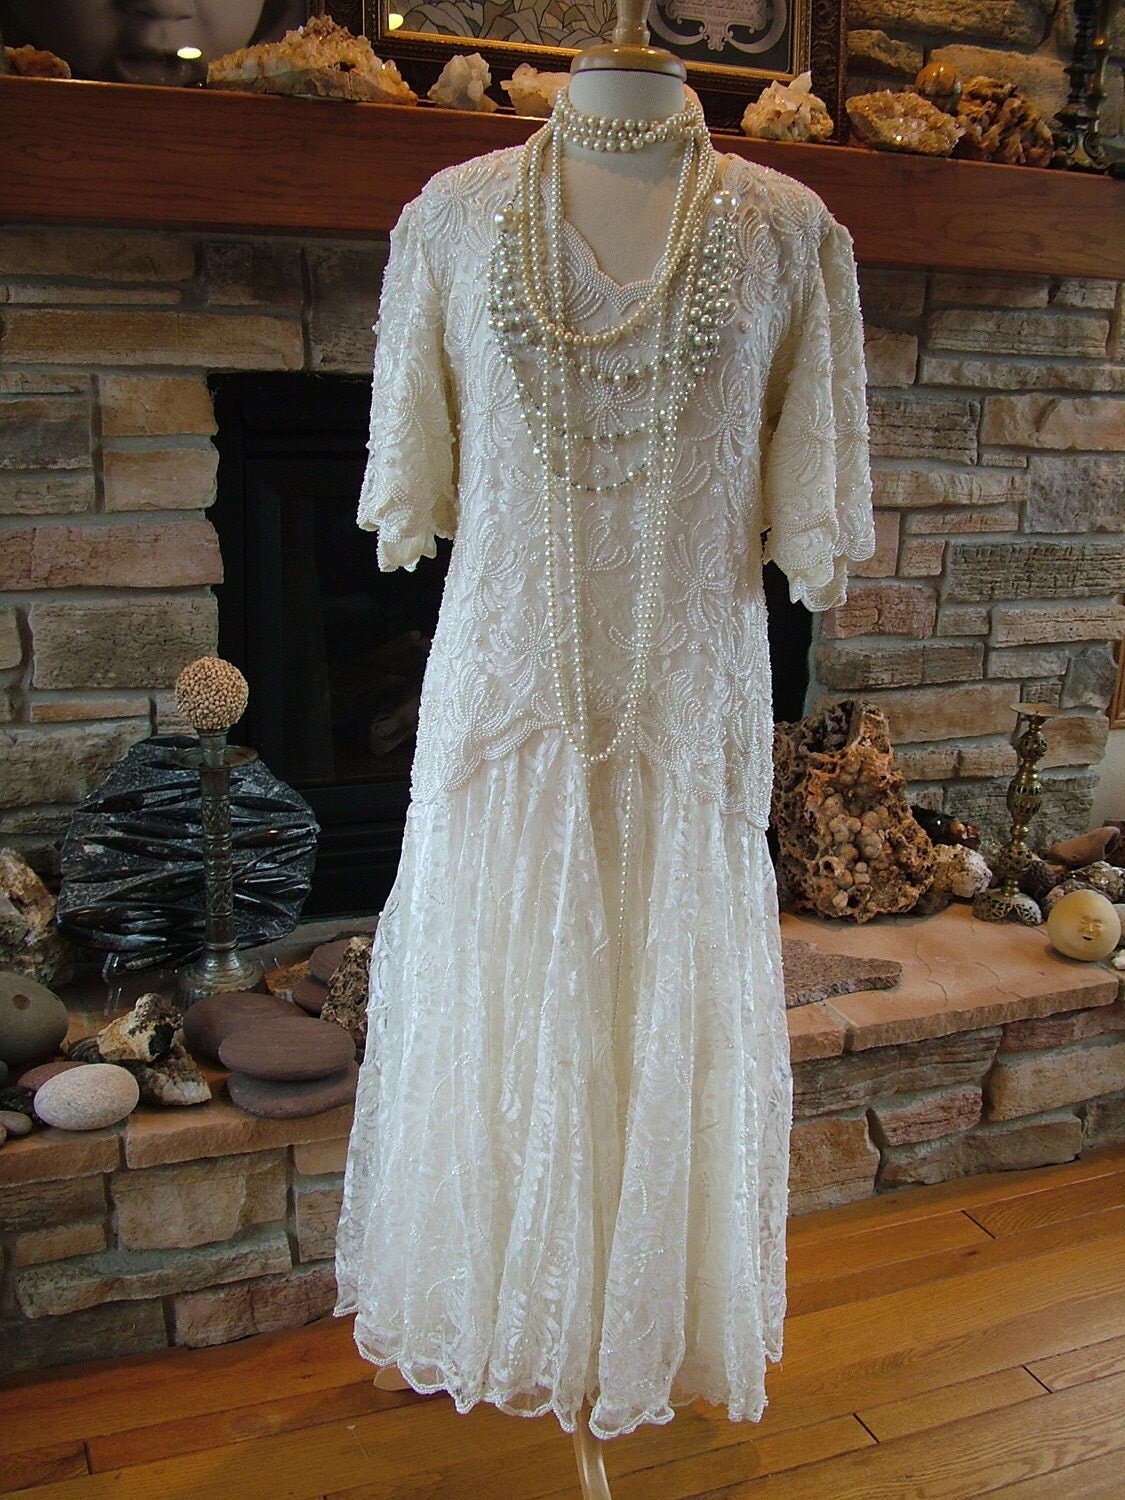 1920s styled beaded wedding dress